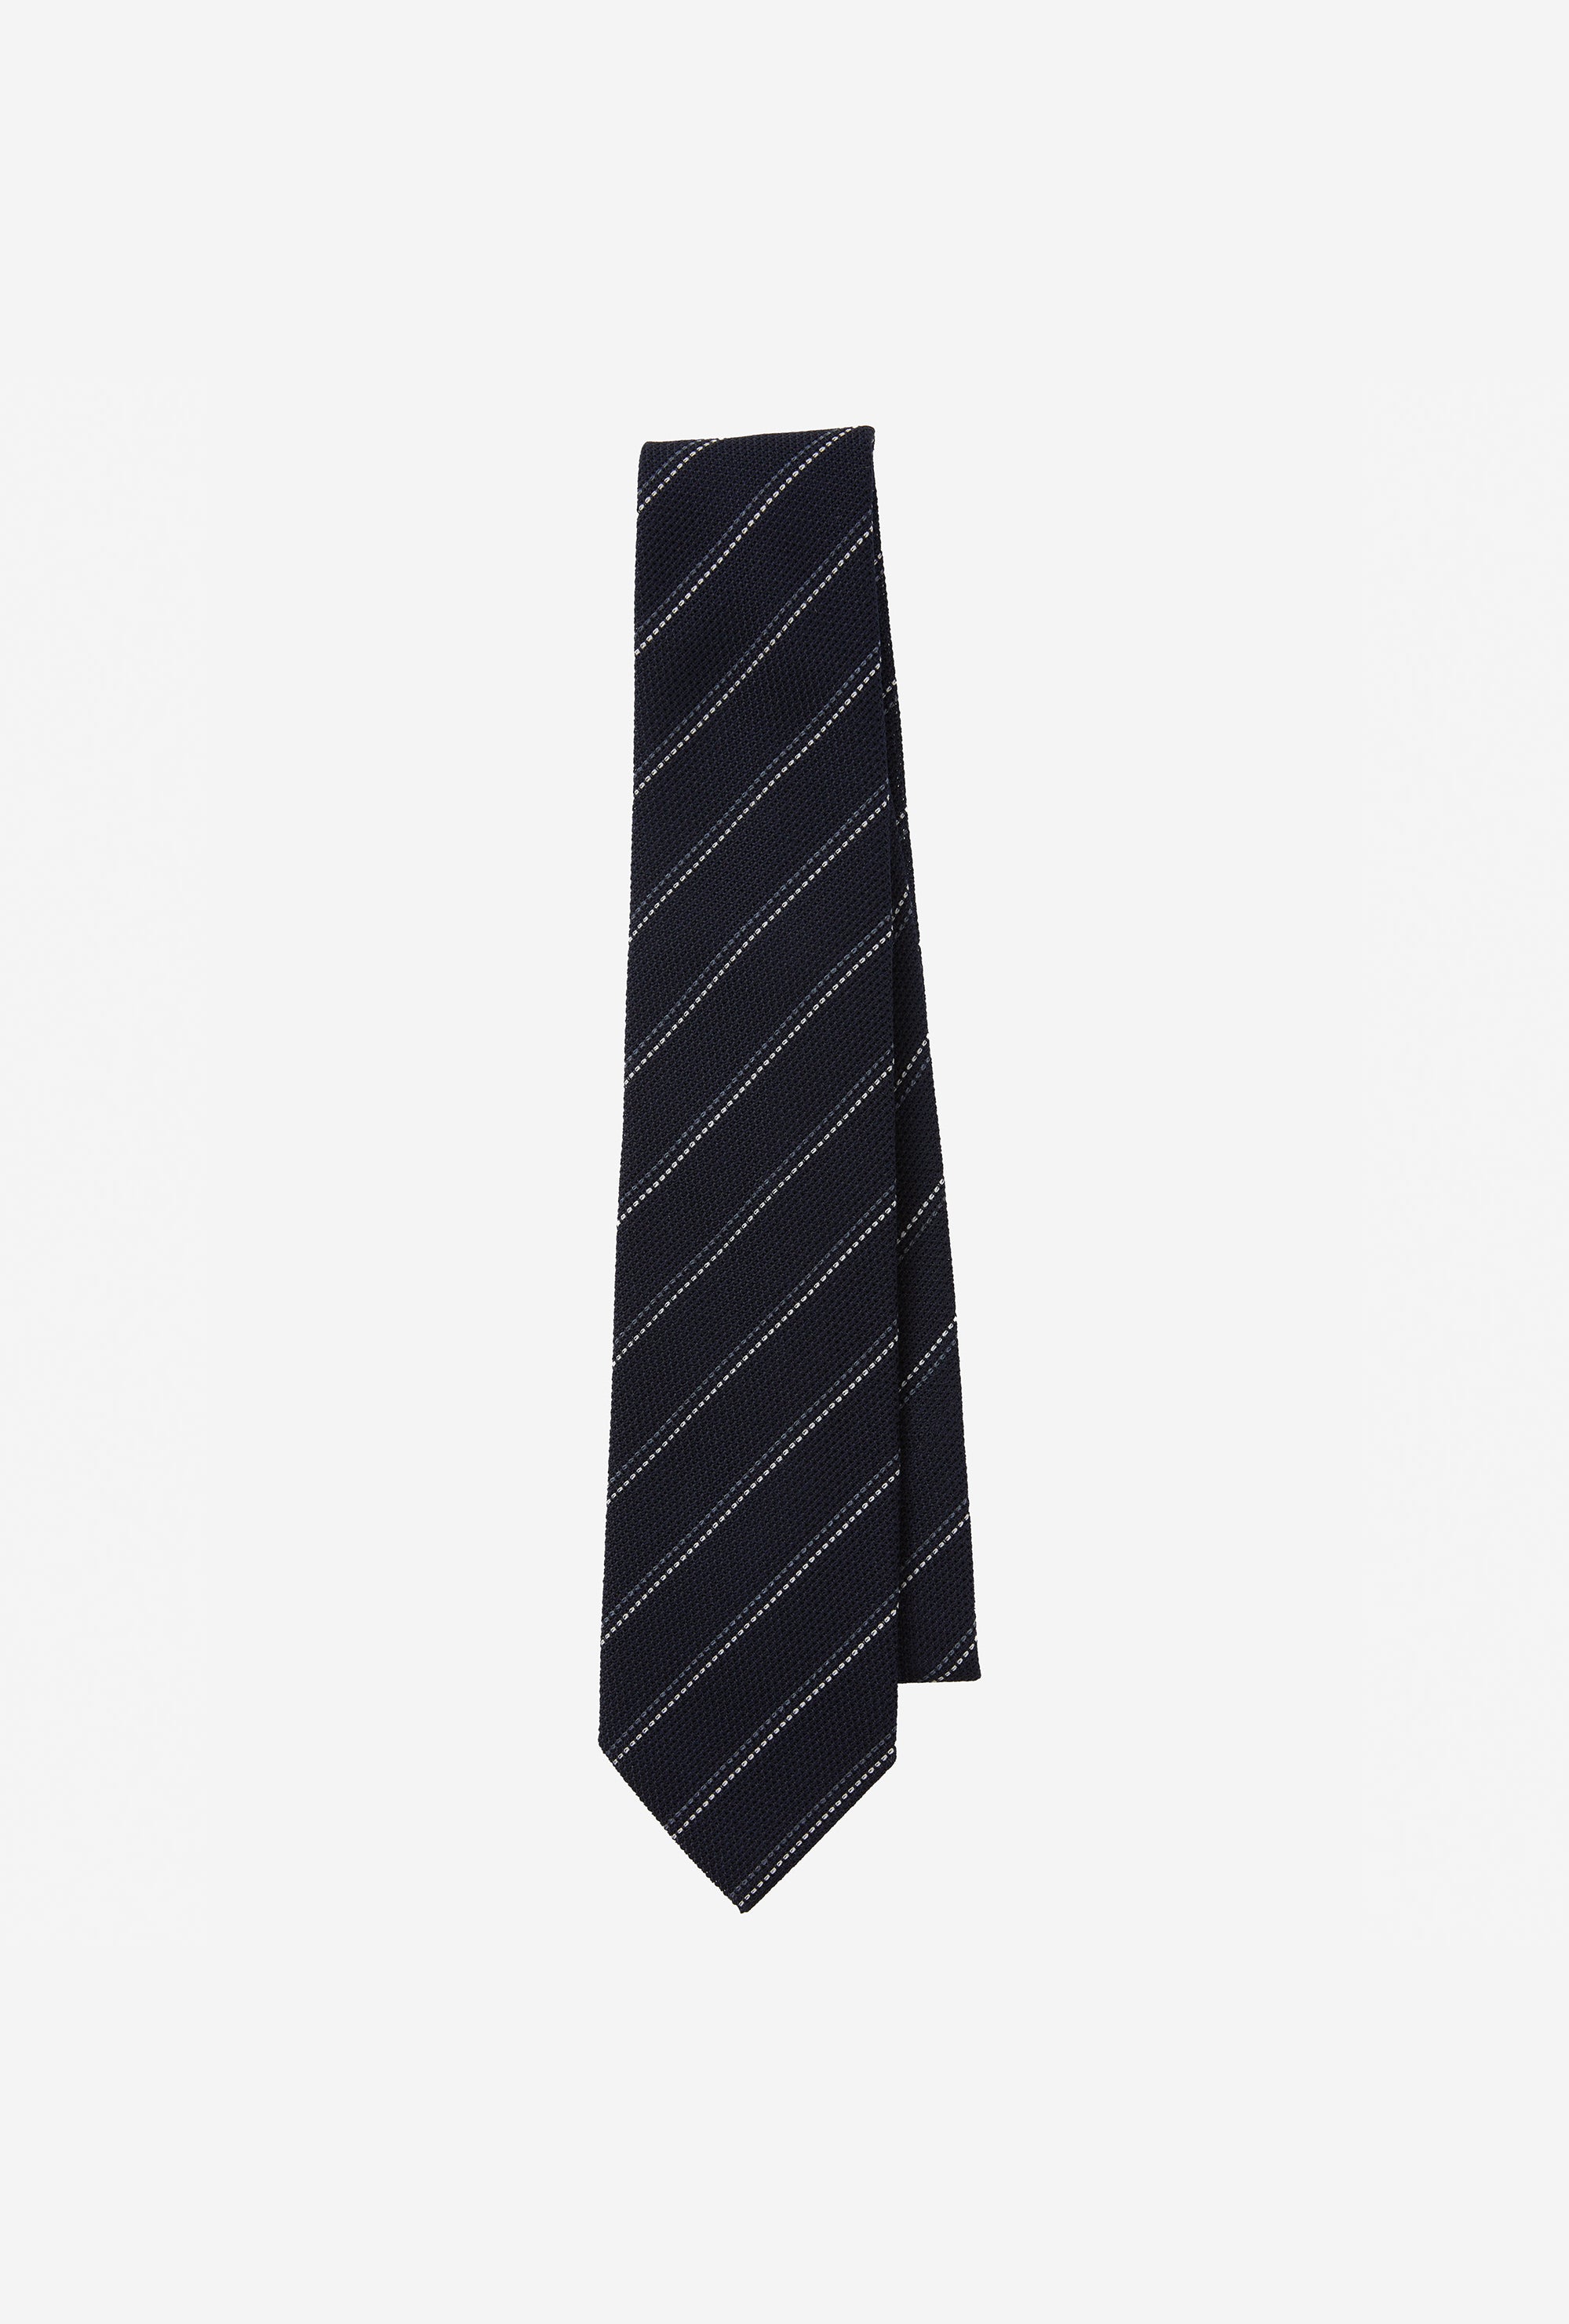 Tie Grenadine Navy White Grey Stripe